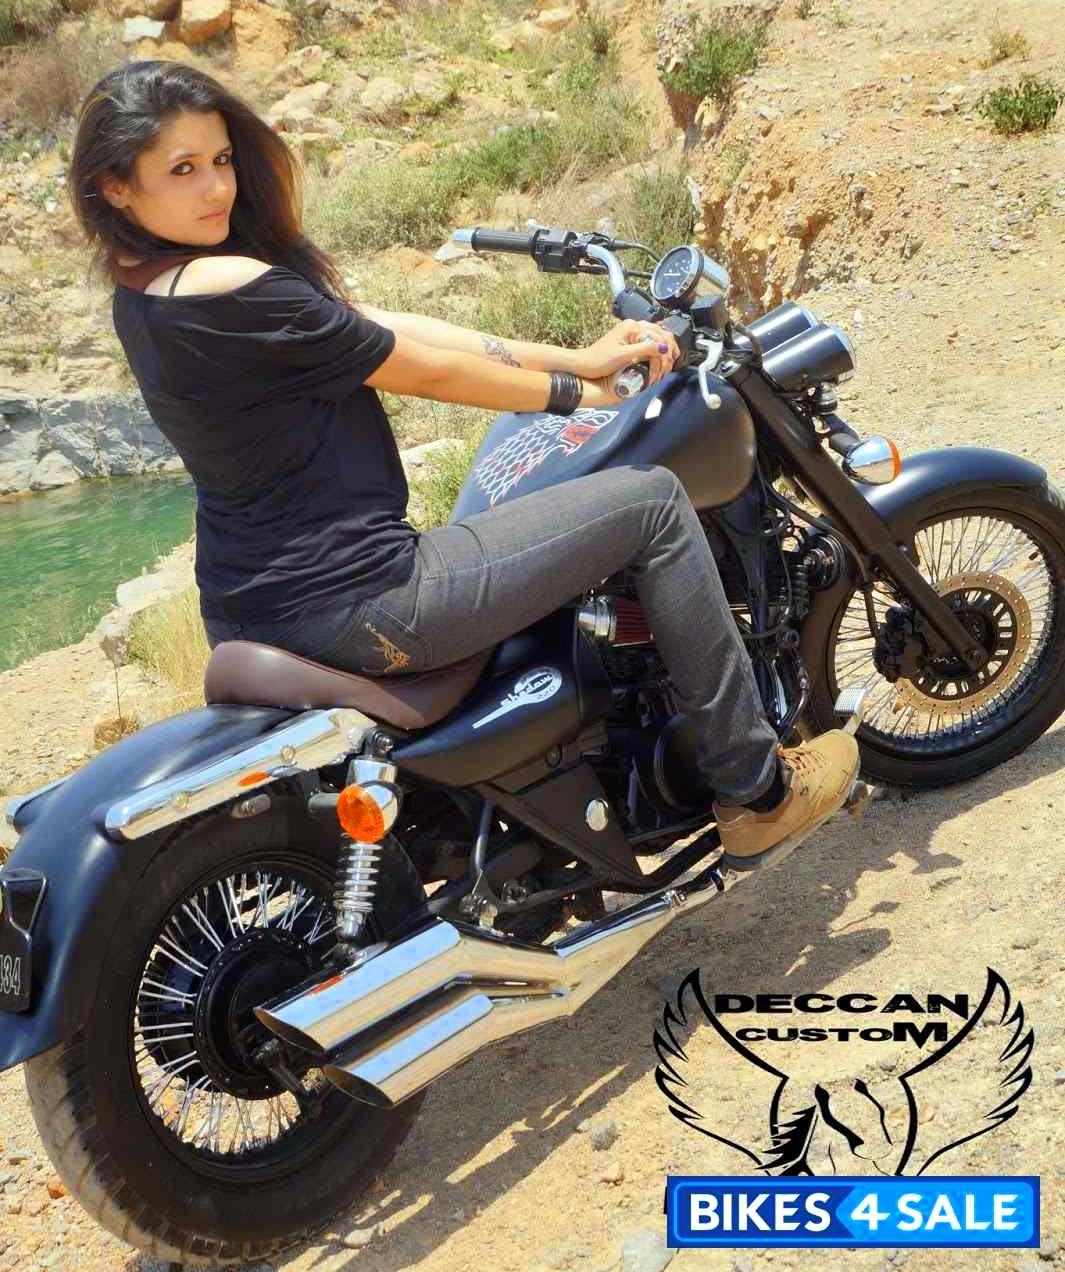 Deccan Custom Motorcycles